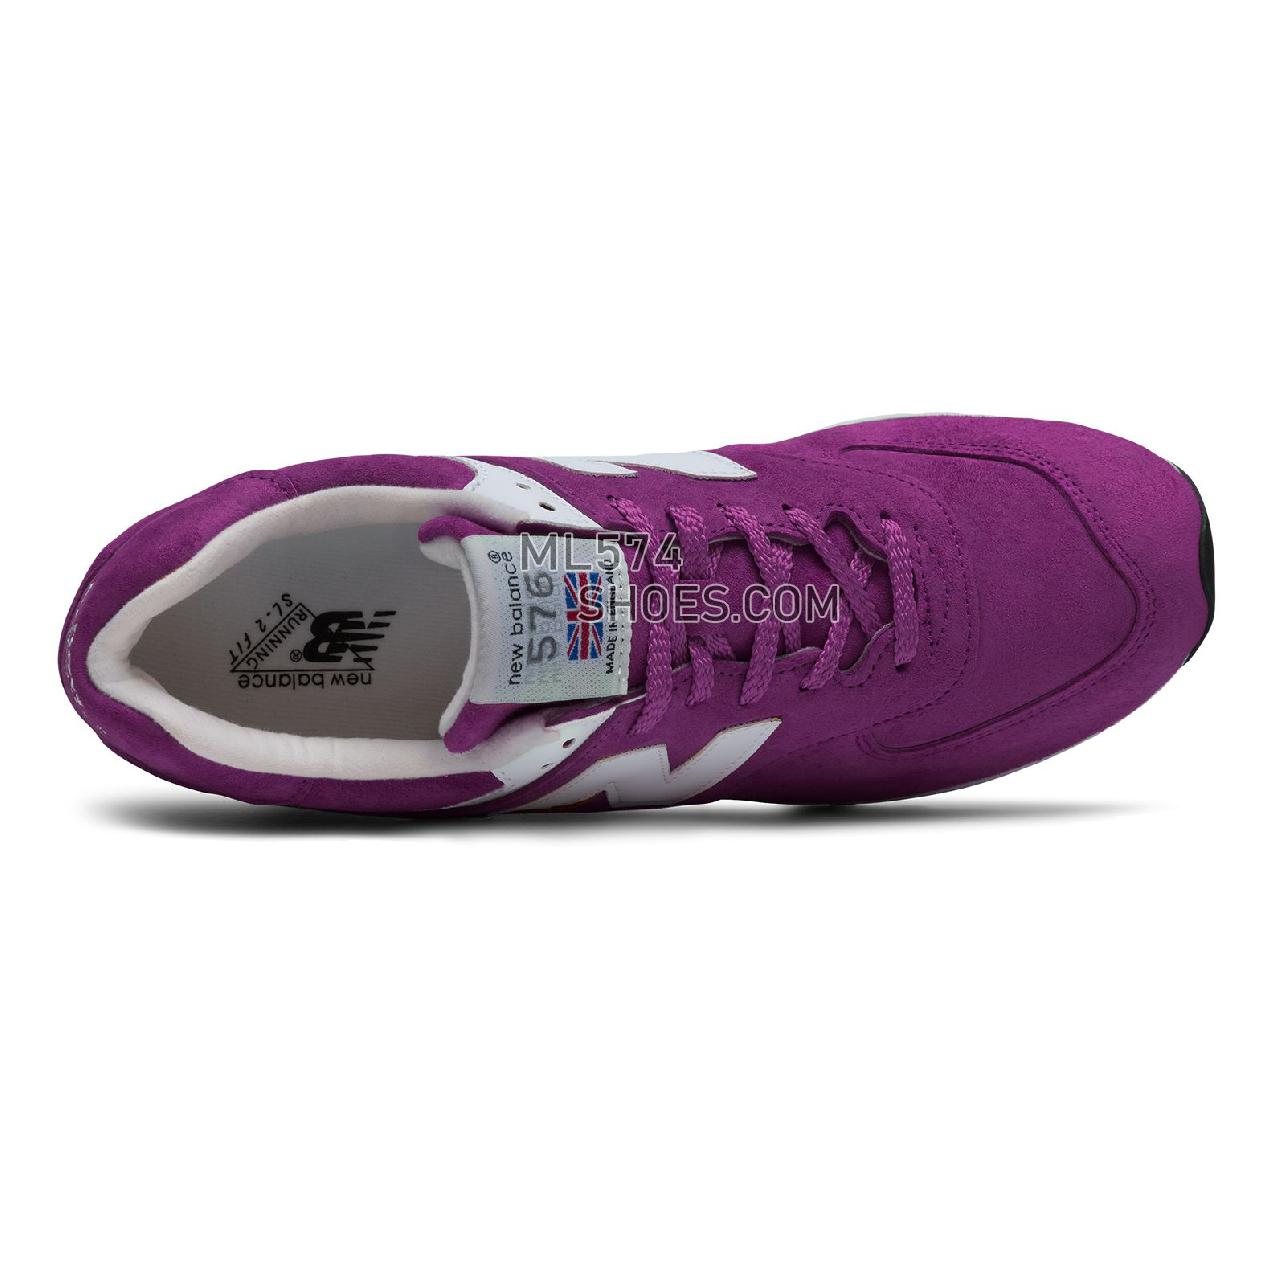 New Balance Made in UK 576 Colour Circle - Men's Made in UK 576 Colour Circle - Purple with White - M576PP